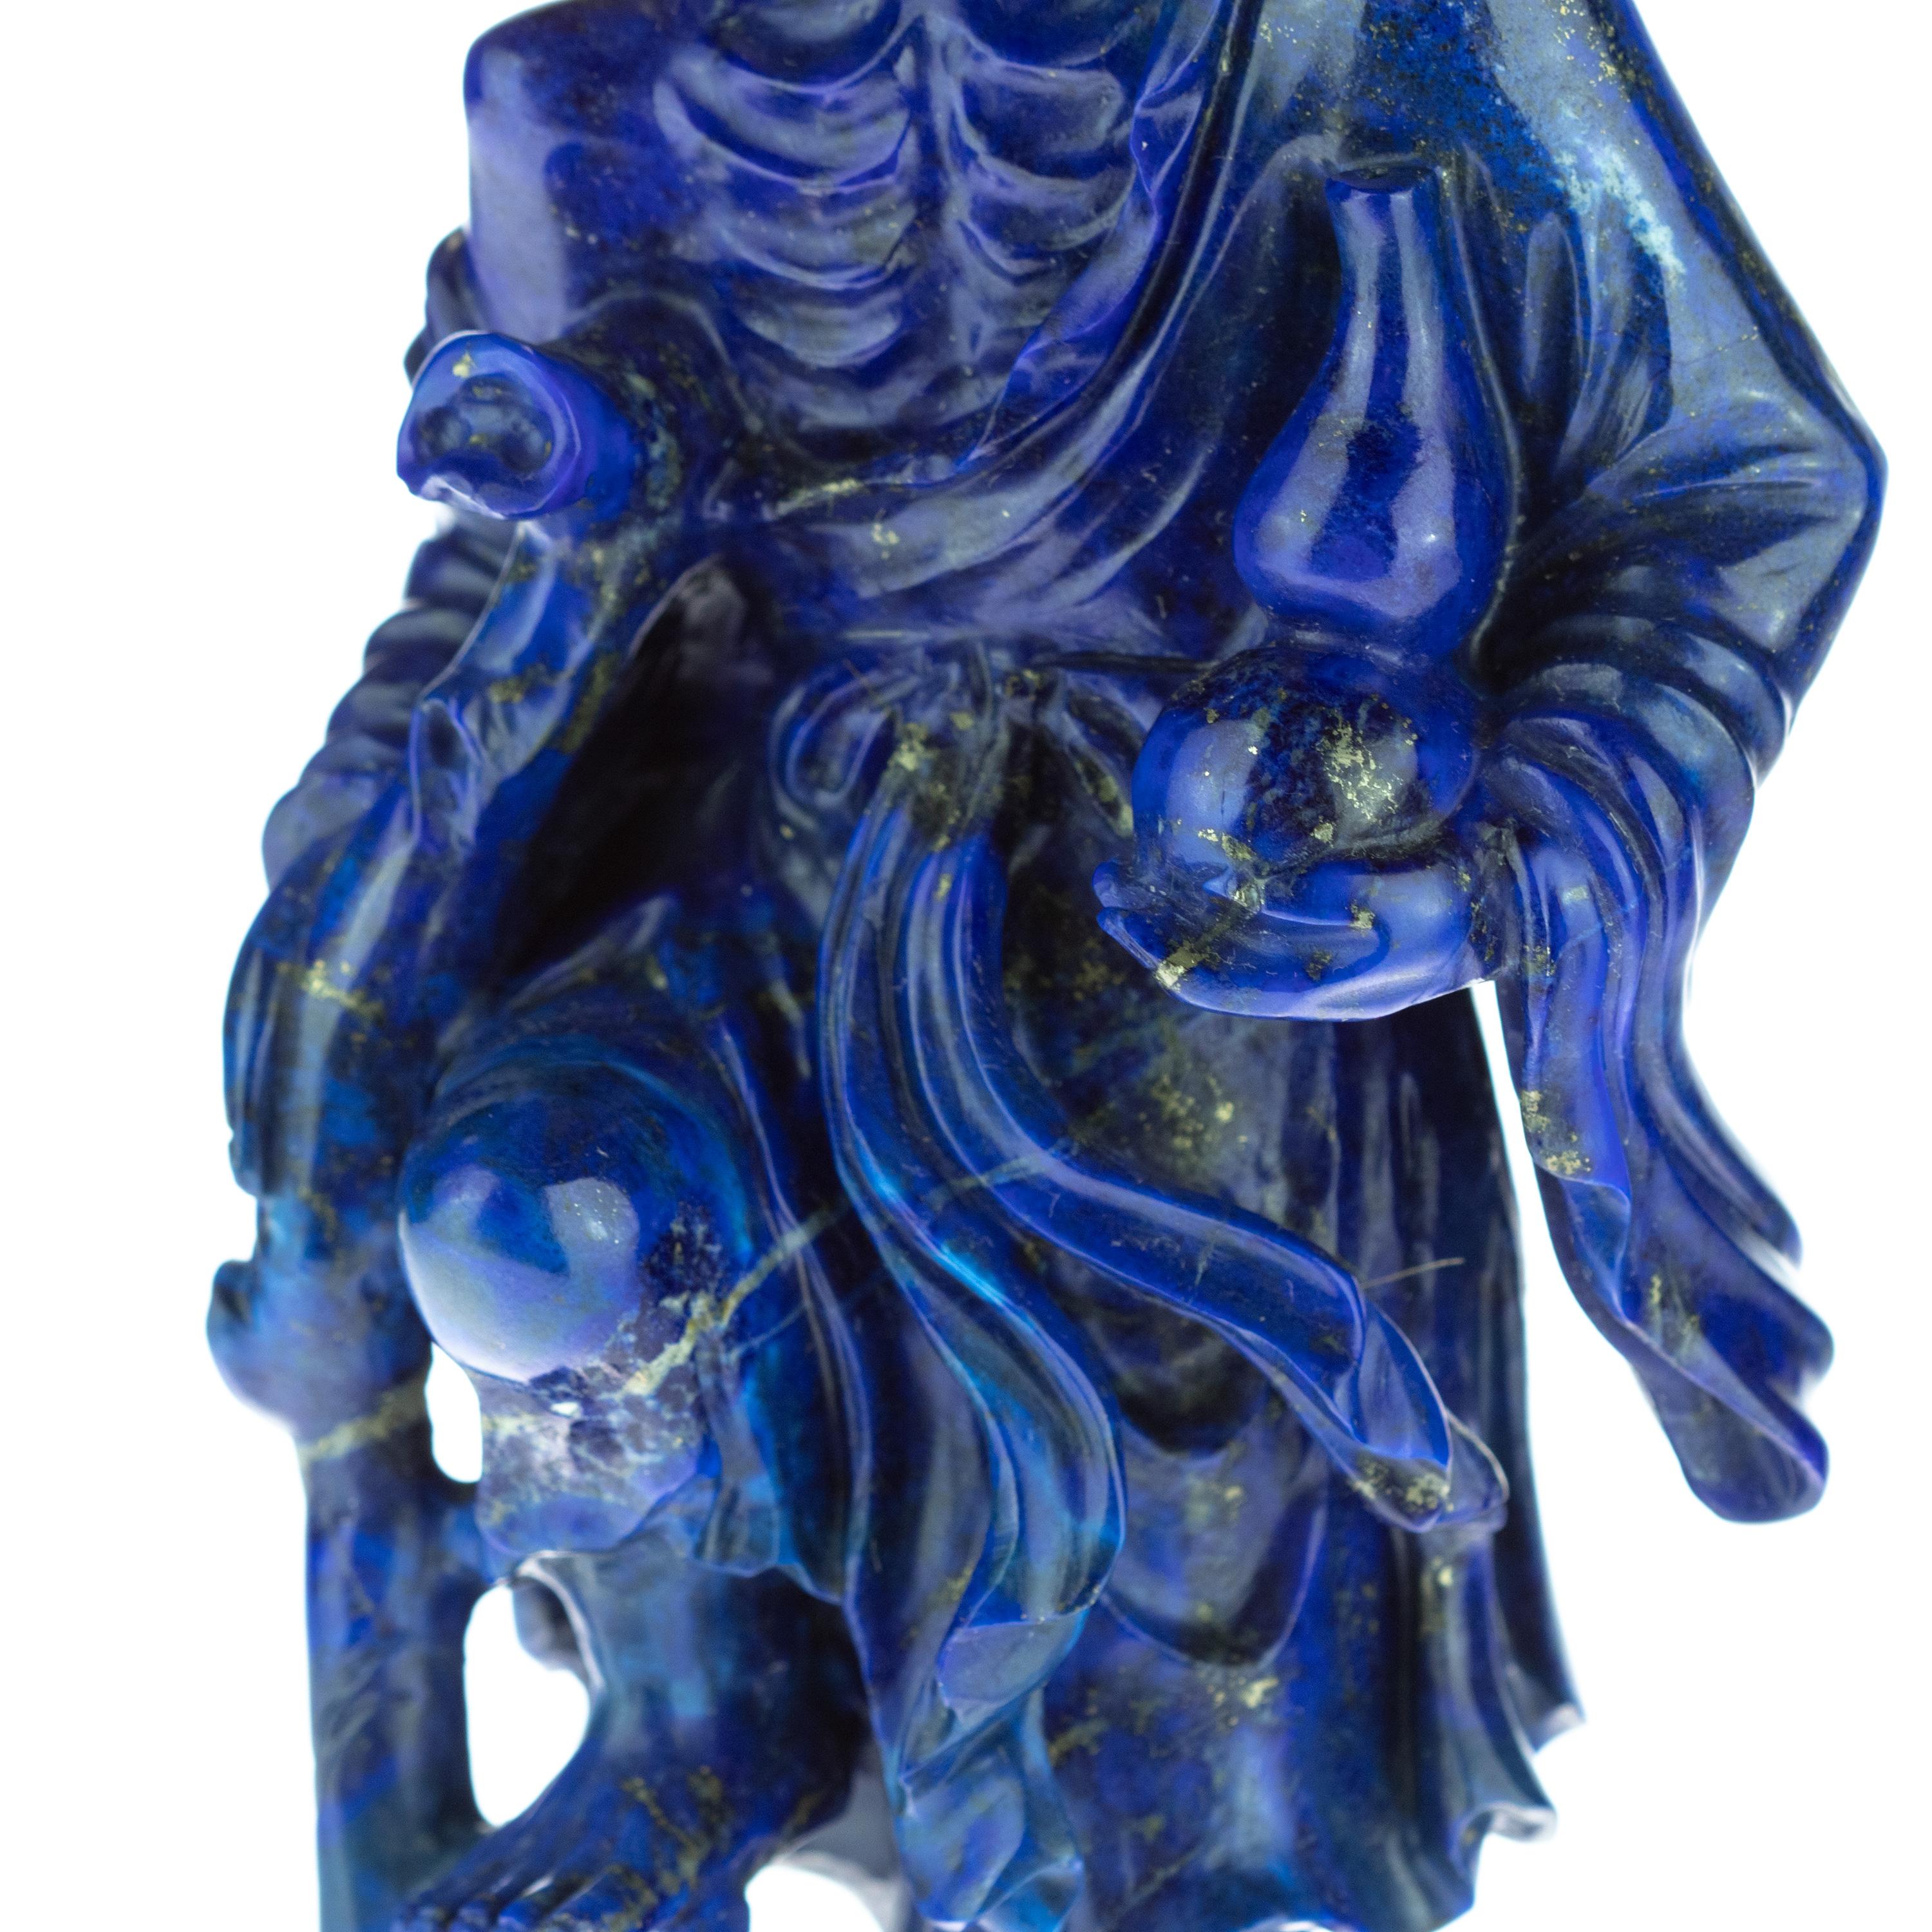 Late 20th Century Lapis Lazuli Man Figurine Carved Human Spiritual Artisanal Statue Sculpture For Sale